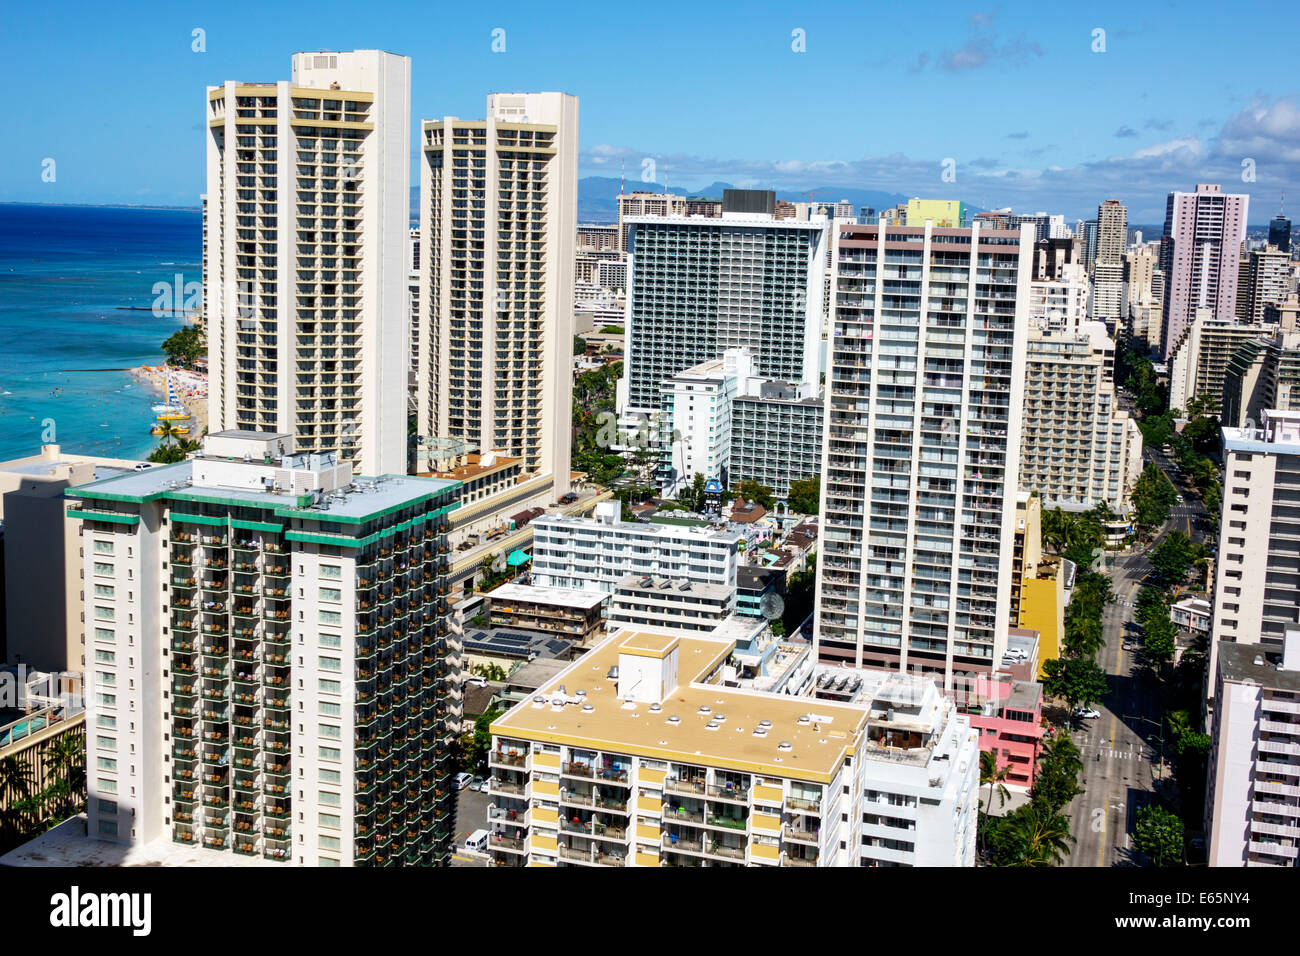 Honolulu Hawaii,Oahu,Hawaiian,Waikiki Beach,Pacific Ocean,resort,high rise,building,hotels,condominium buildings,USA,US,United,States,America Polynesi Stock Photo